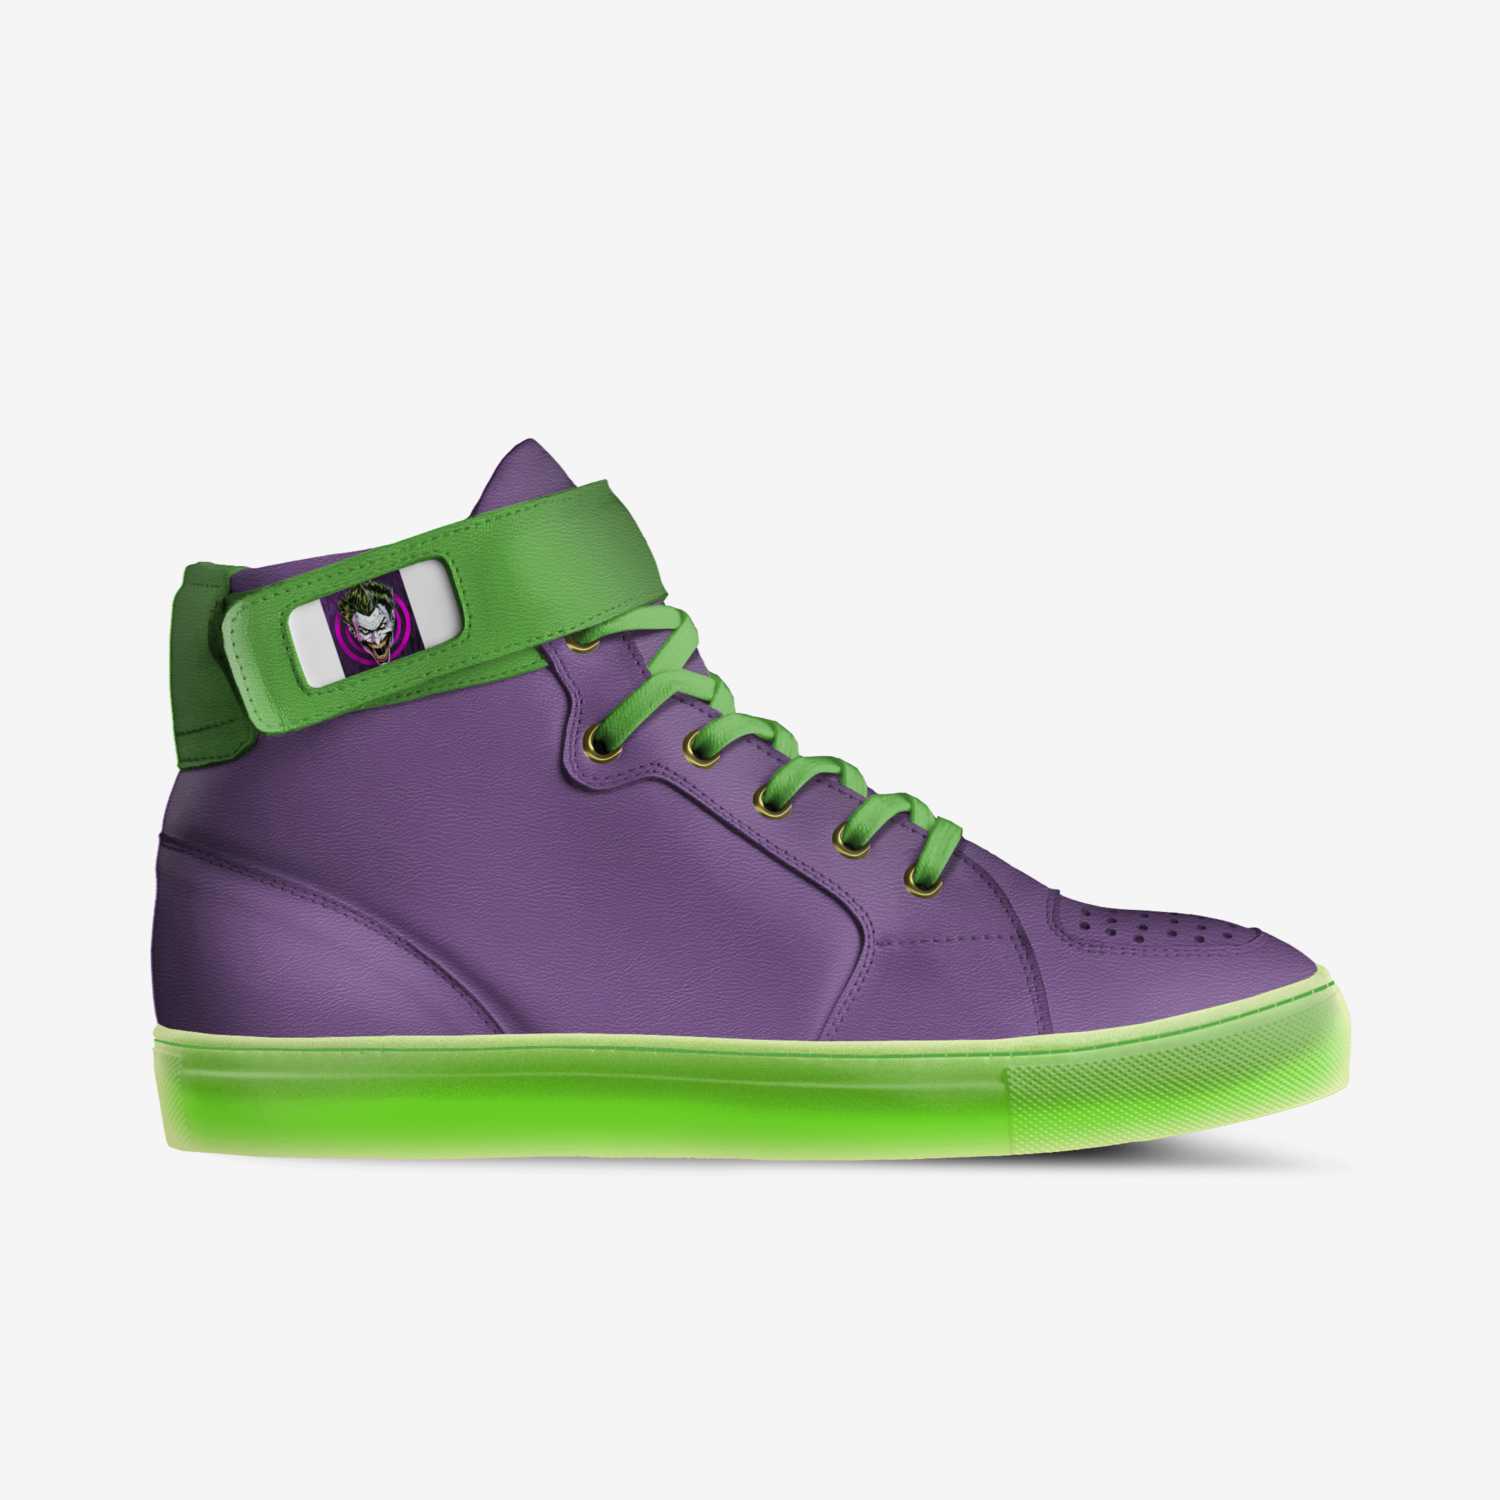 The joker | A Custom Shoe concept by Carter Stone